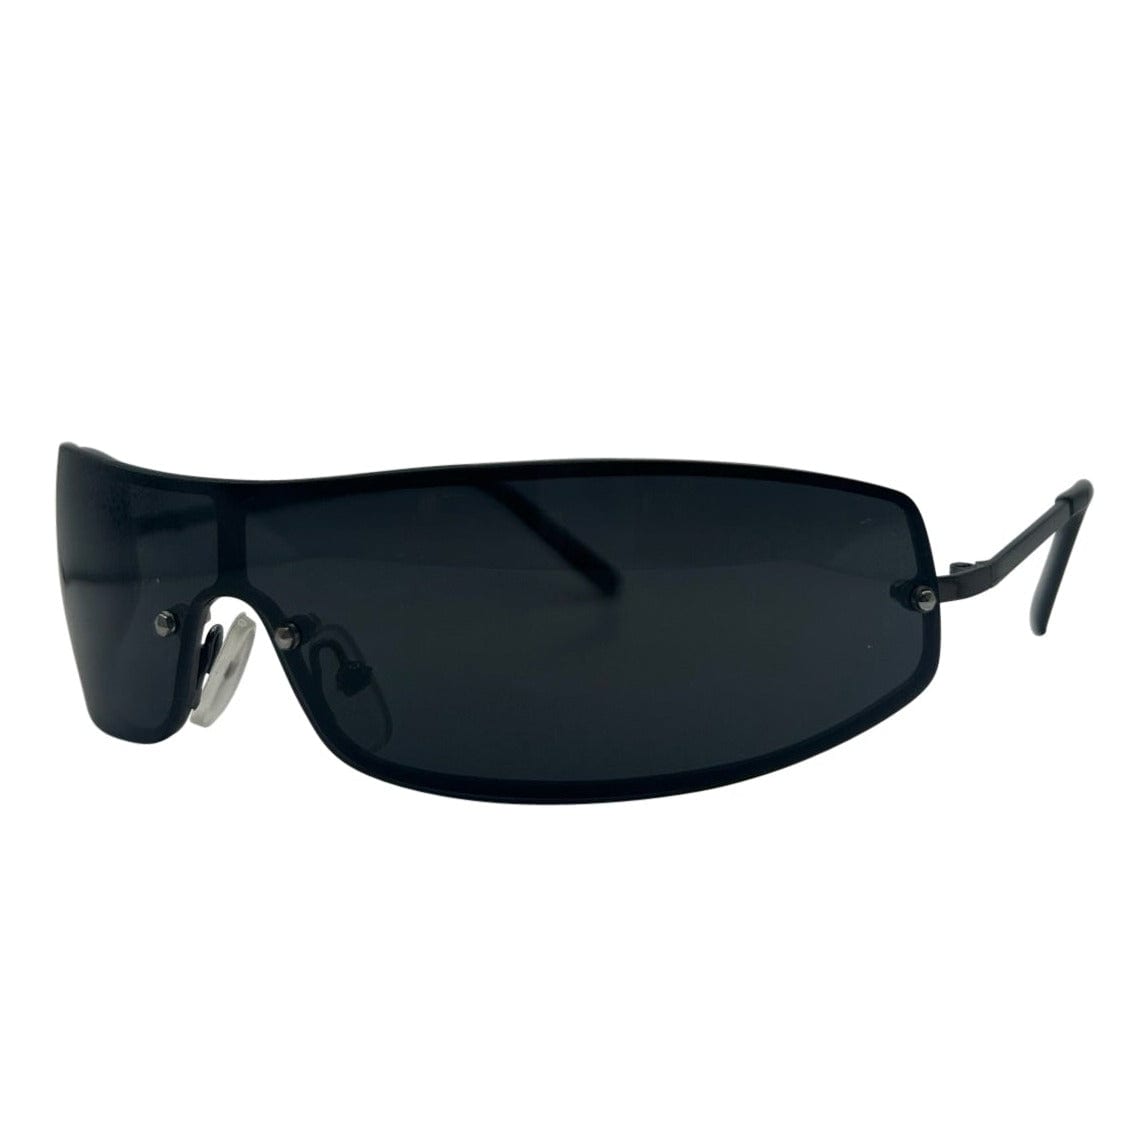 UNDERCOVER Futuristic Wraparound Sunglasses